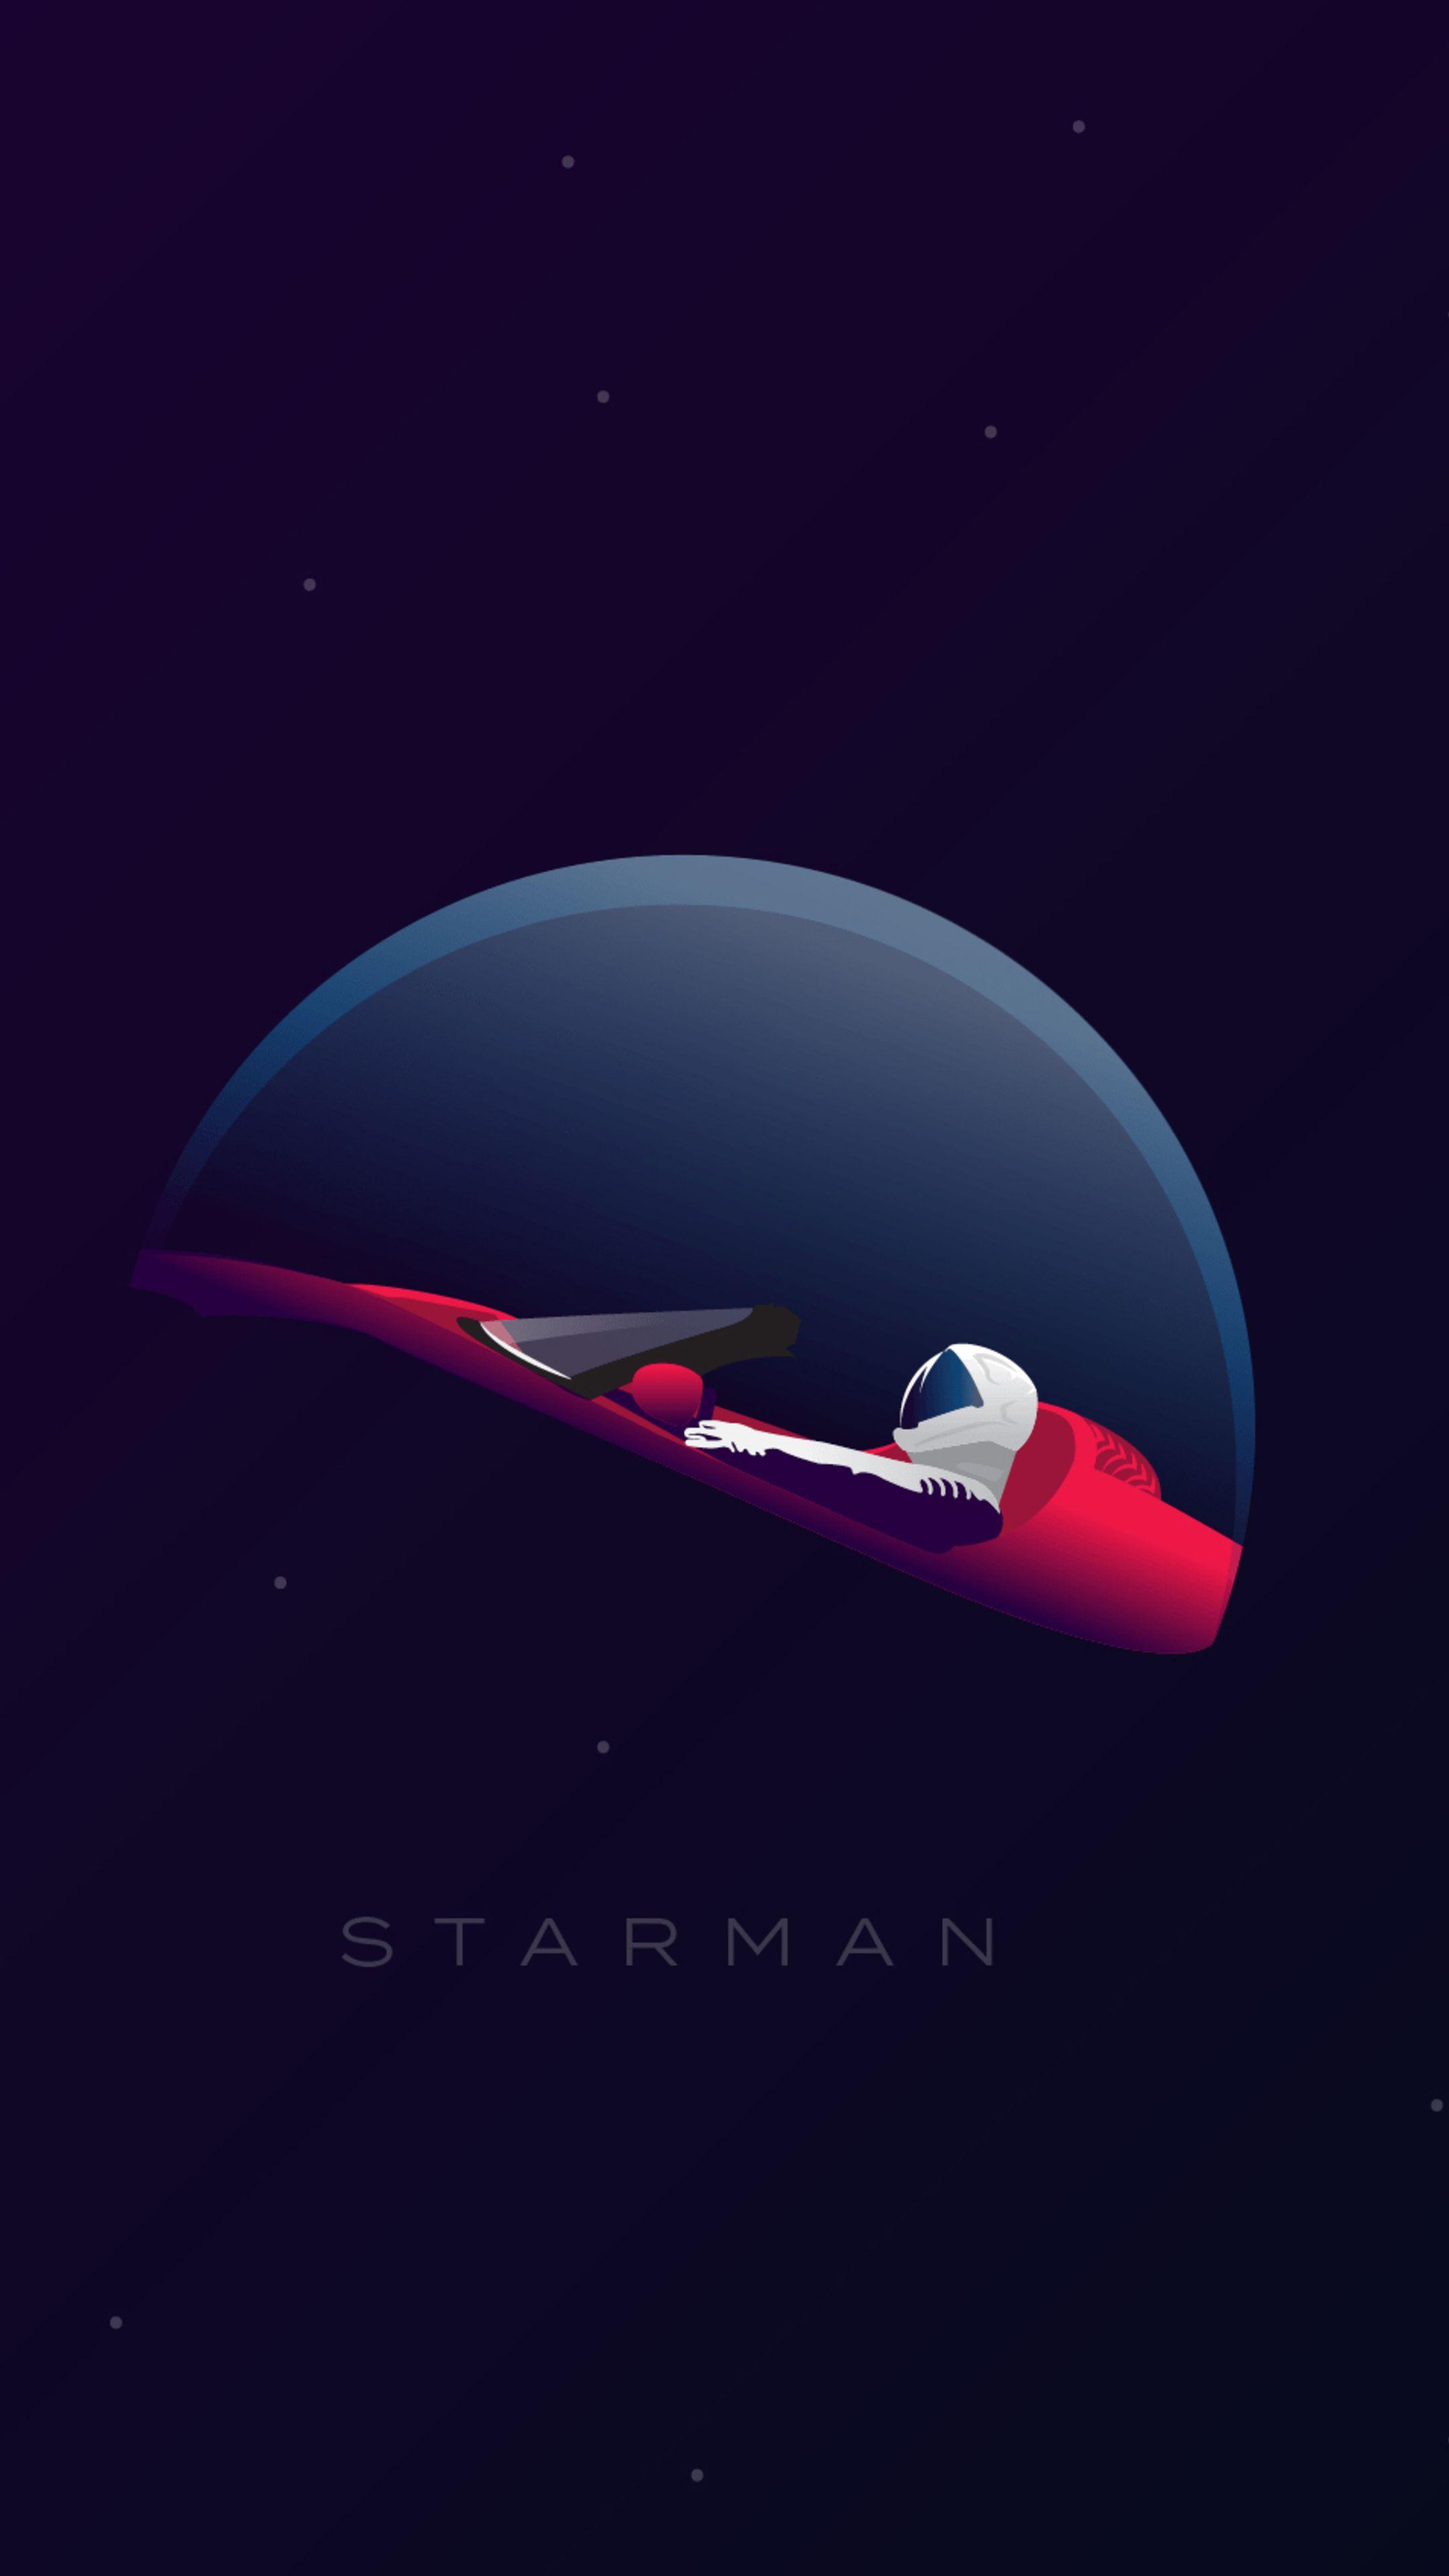 Starman Illustration In 2160x3840 Resolution. Space. Wallpaper